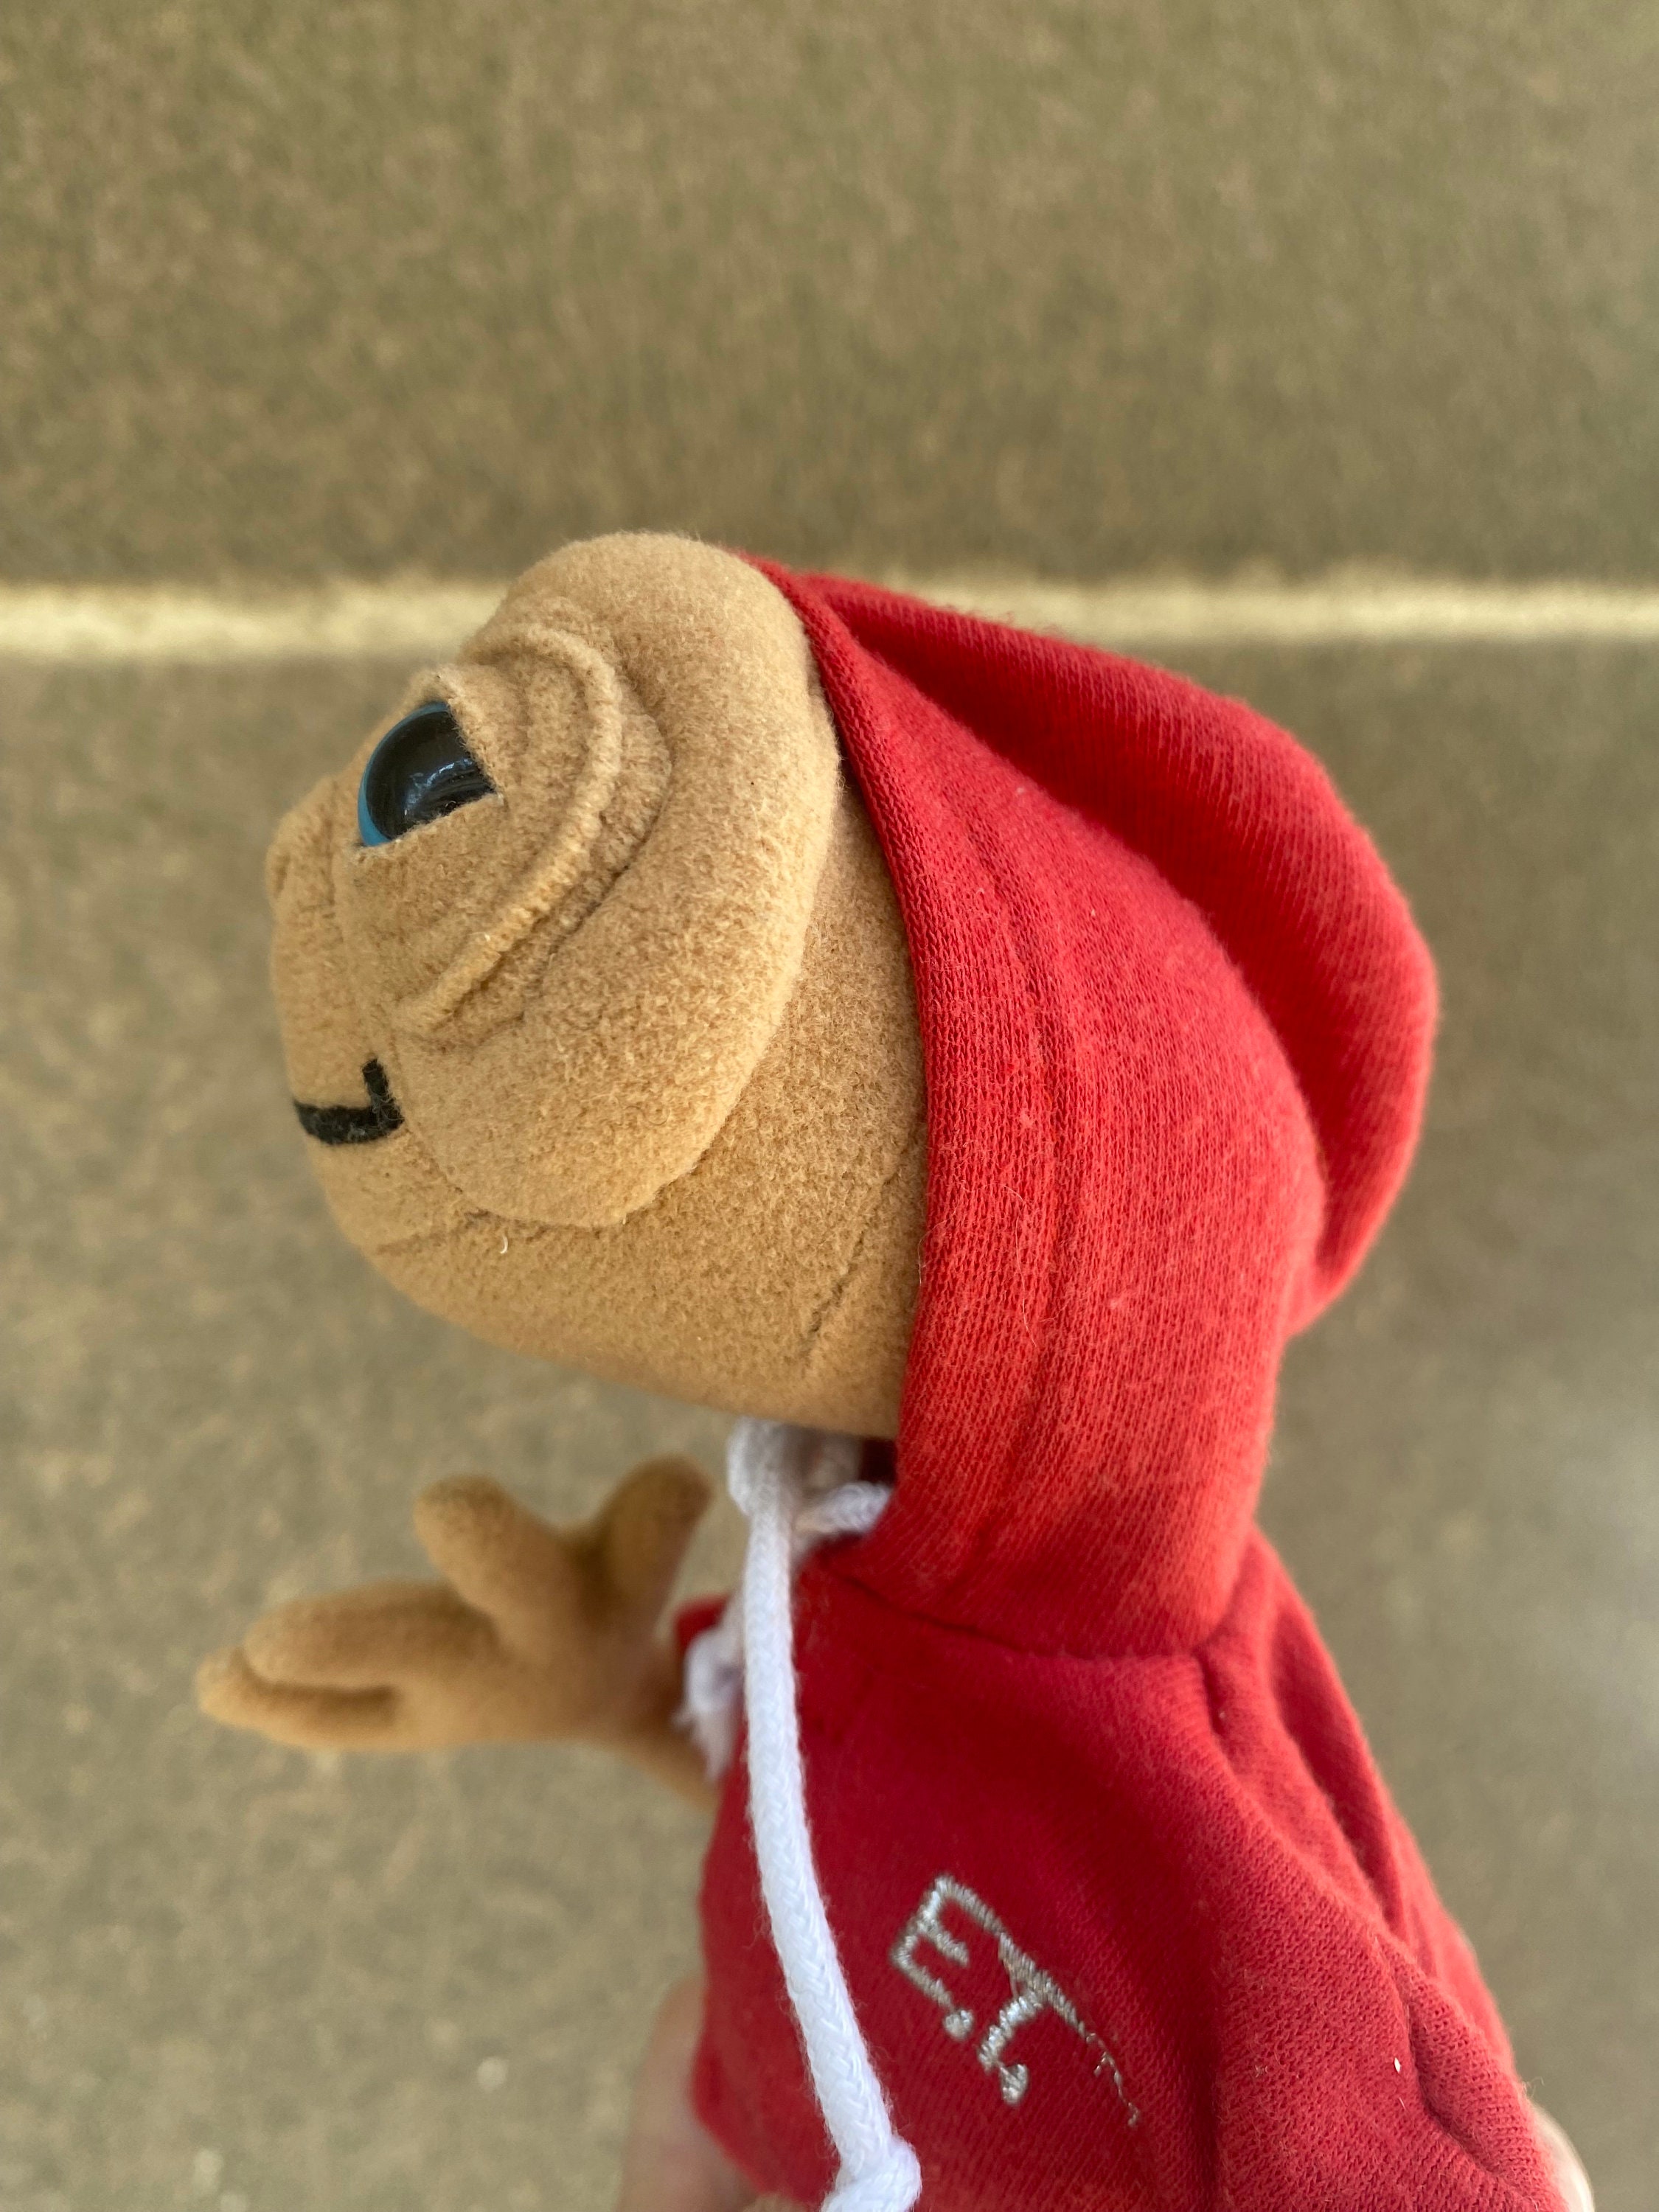 ET Extra Terrestrial Plush Toy Stuffed Alien Toy in Red Hoodie, ET